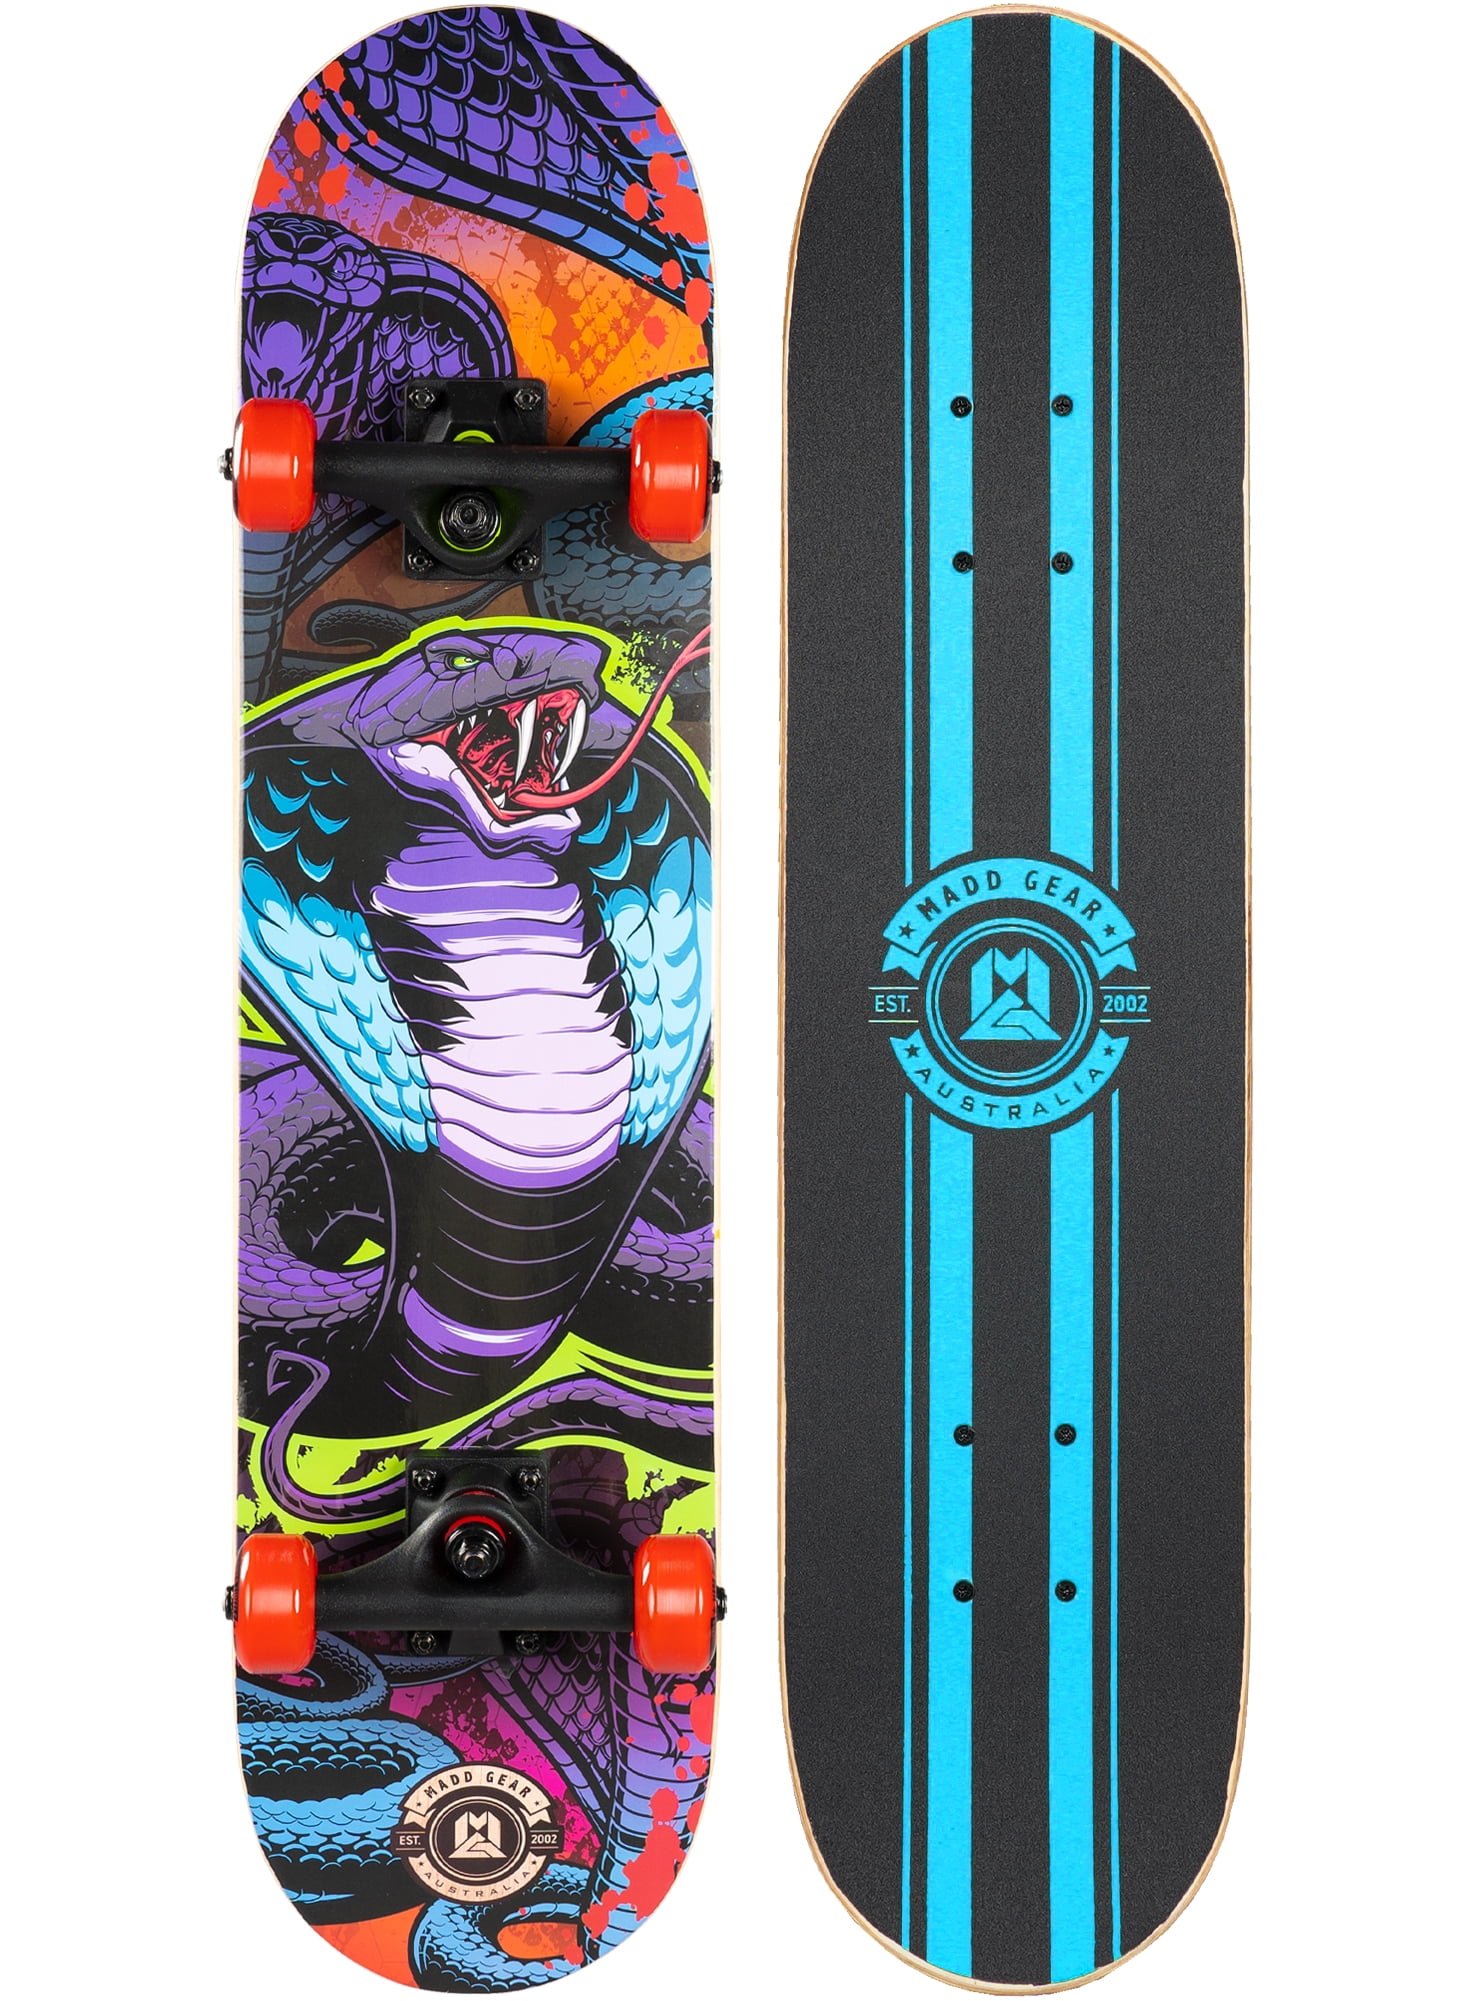 Madd Gear 31 7 Kicktail Beginner Complete Skateboard with Maple Deck -